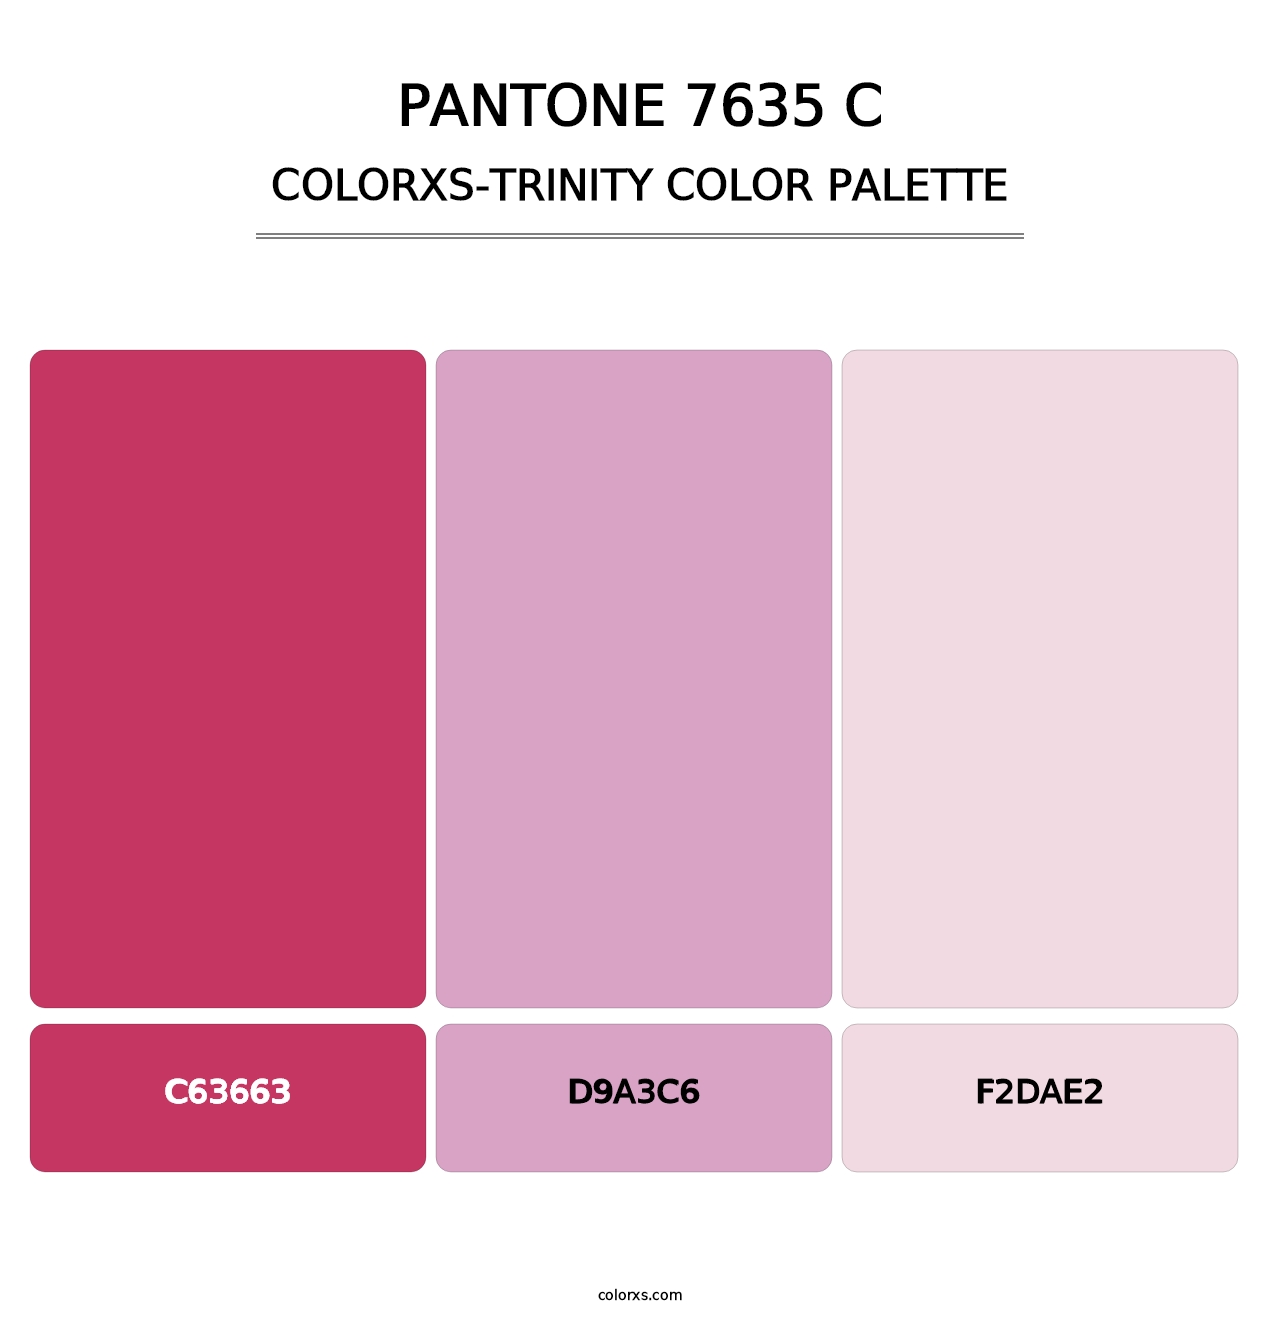 PANTONE 7635 C - Colorxs Trinity Palette